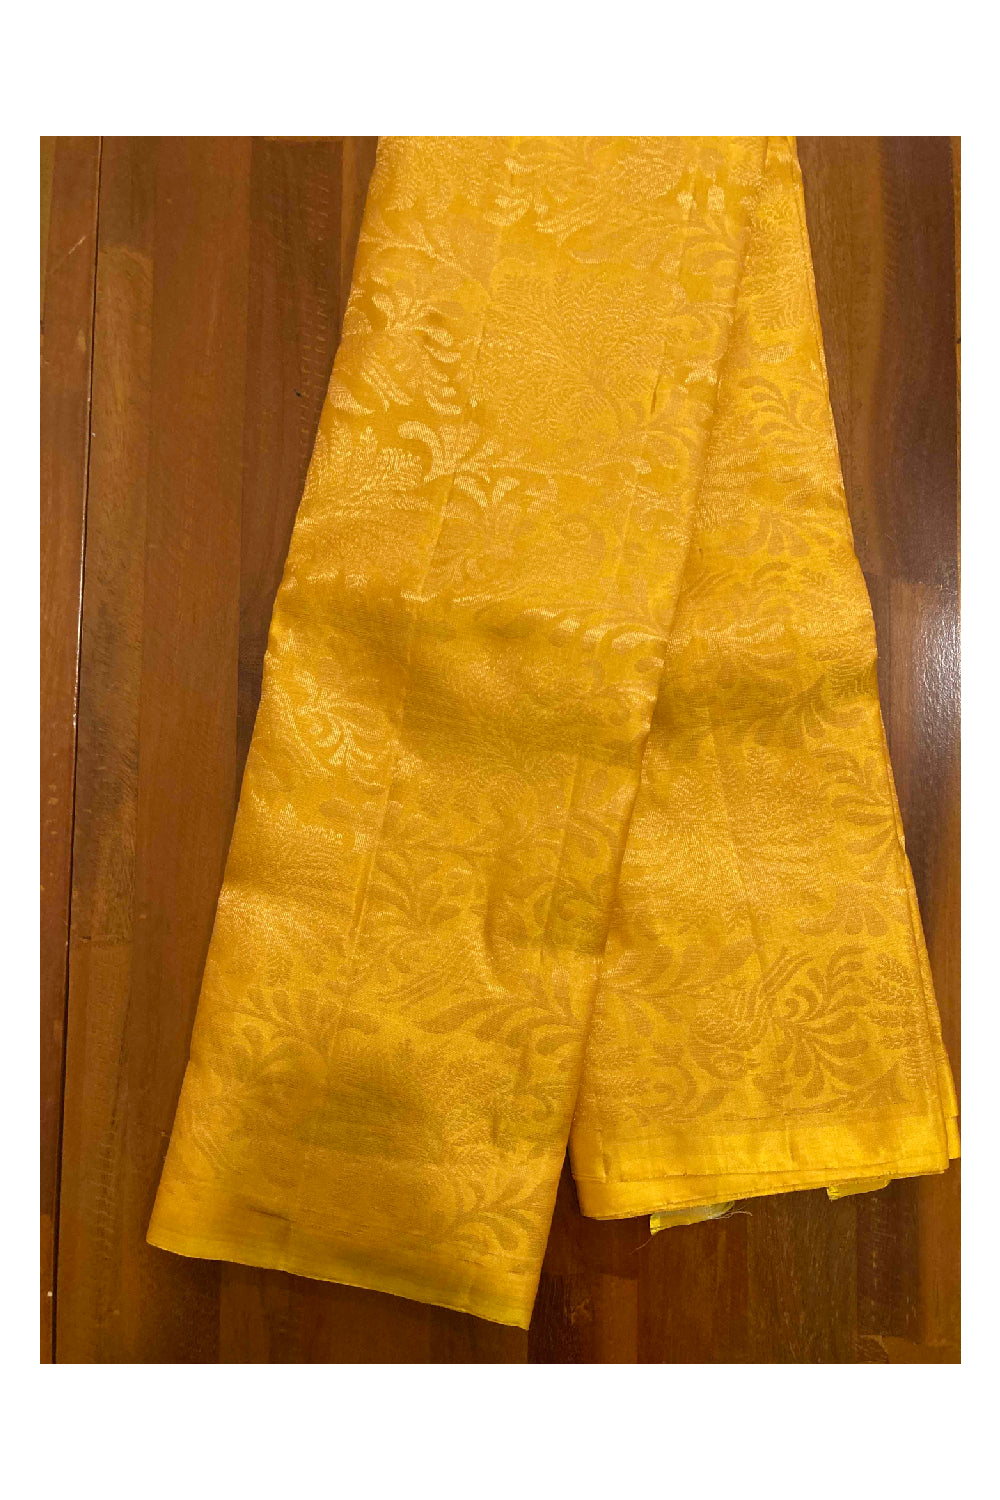 Southloom Handloom Pure Silk Manthrakodi Kanchipuram Saree in Single Yellow Colour and Zari Motifs